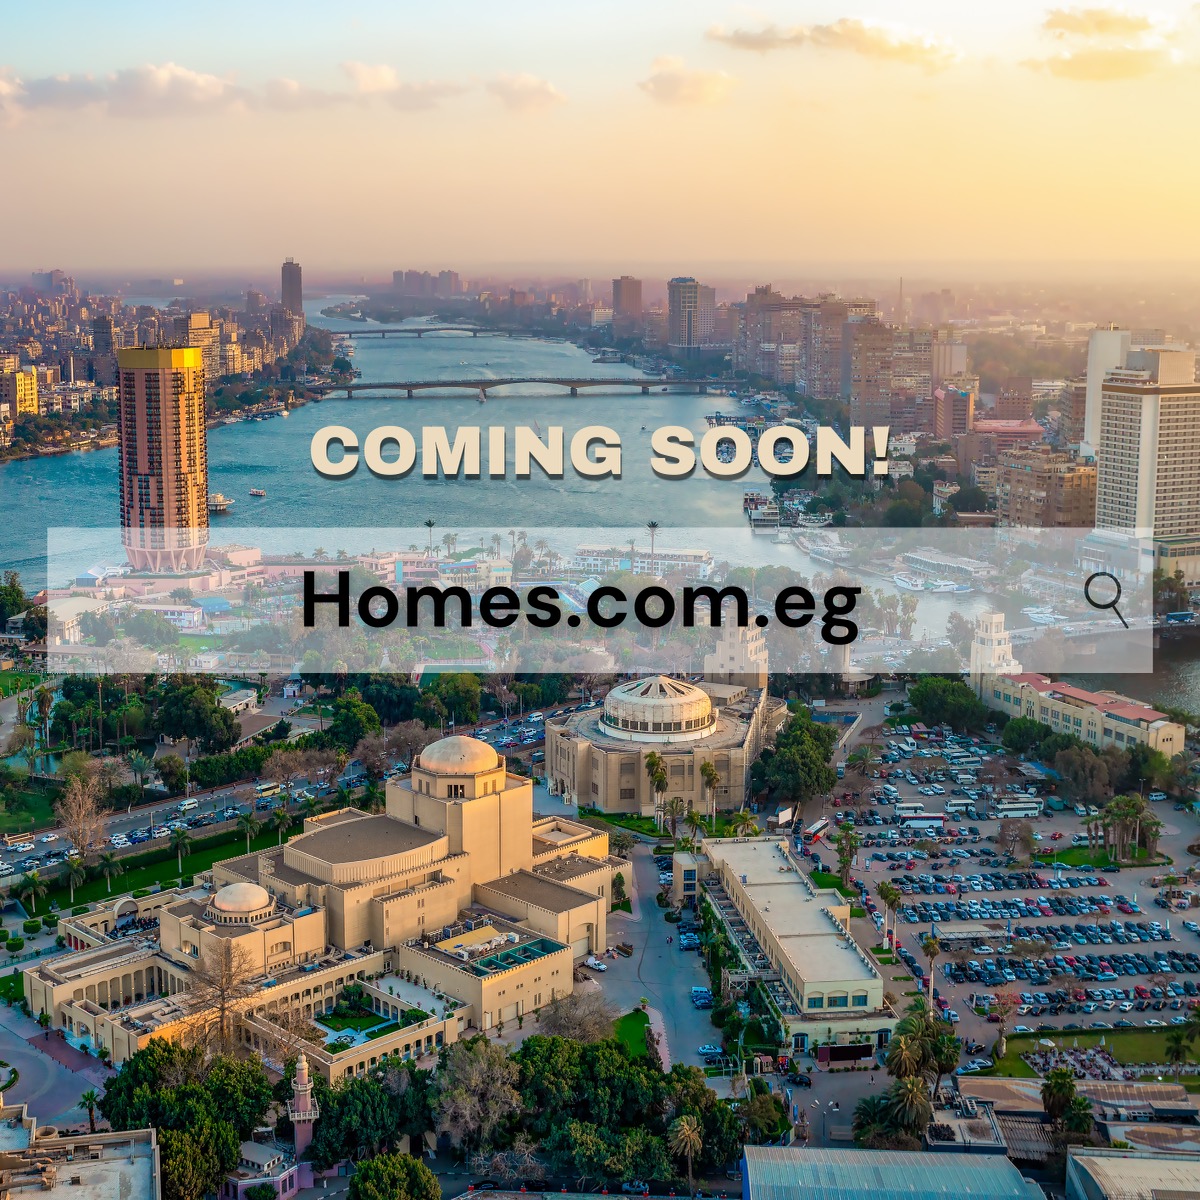 Platform Leaders LLCs' Homes.com.eg Is Set To Launch Their Unique Real Estate Platform In 2022